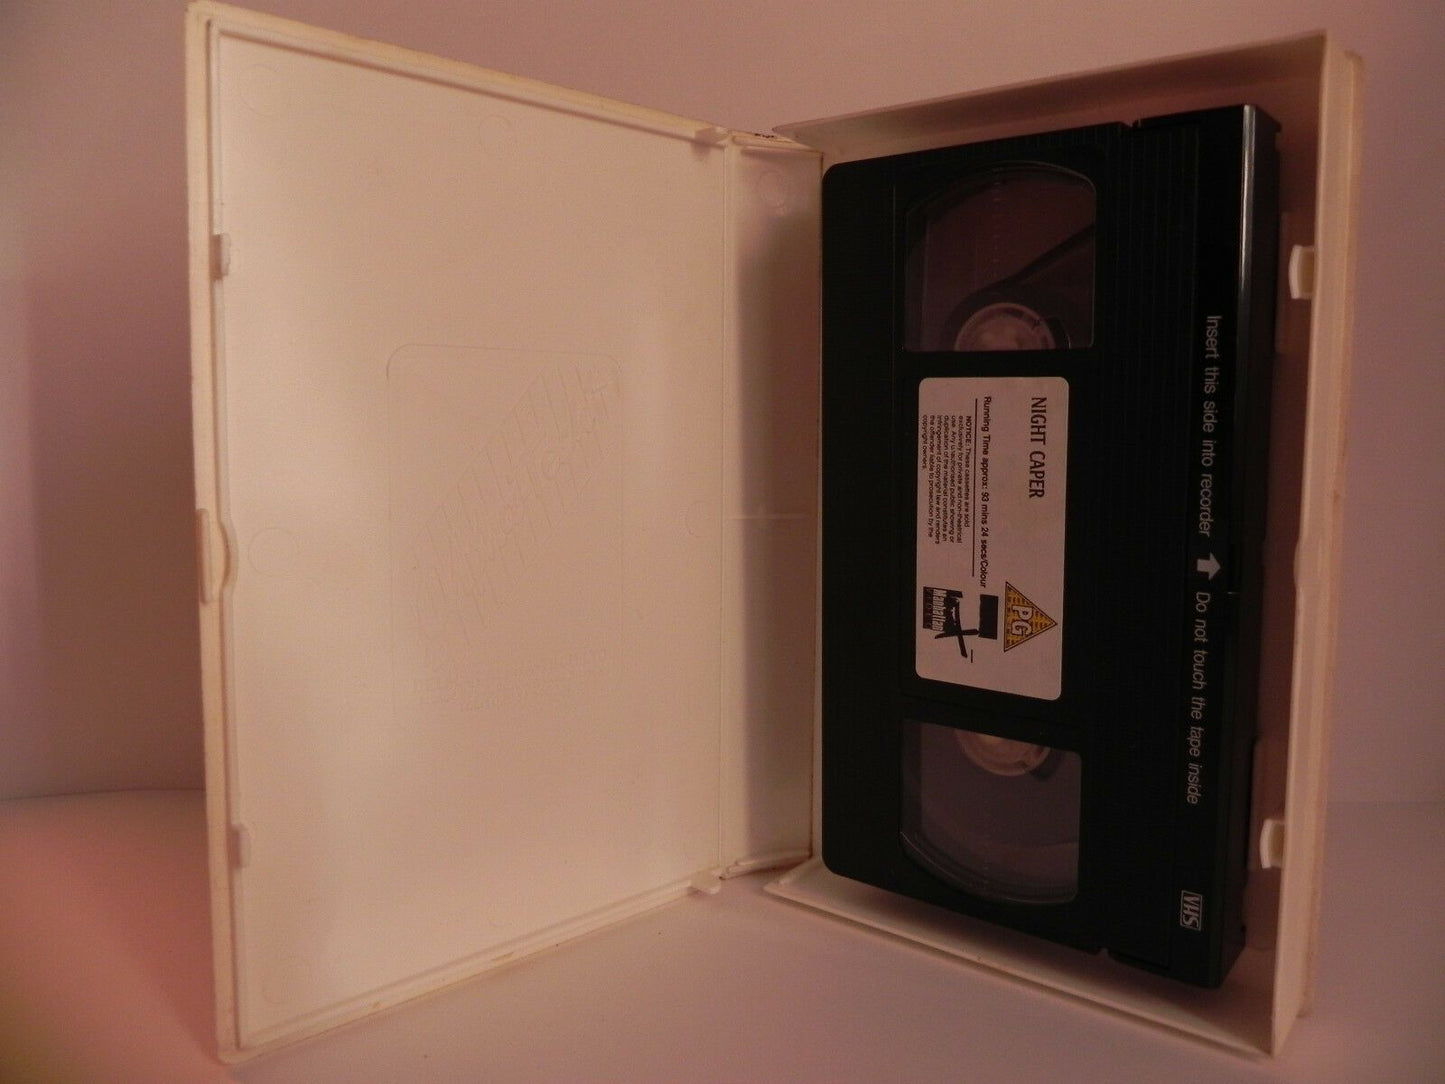 Night Caper - Gene Wilder - Comedy - Big Box Ex-Rental - Manhattan Video - VHS-